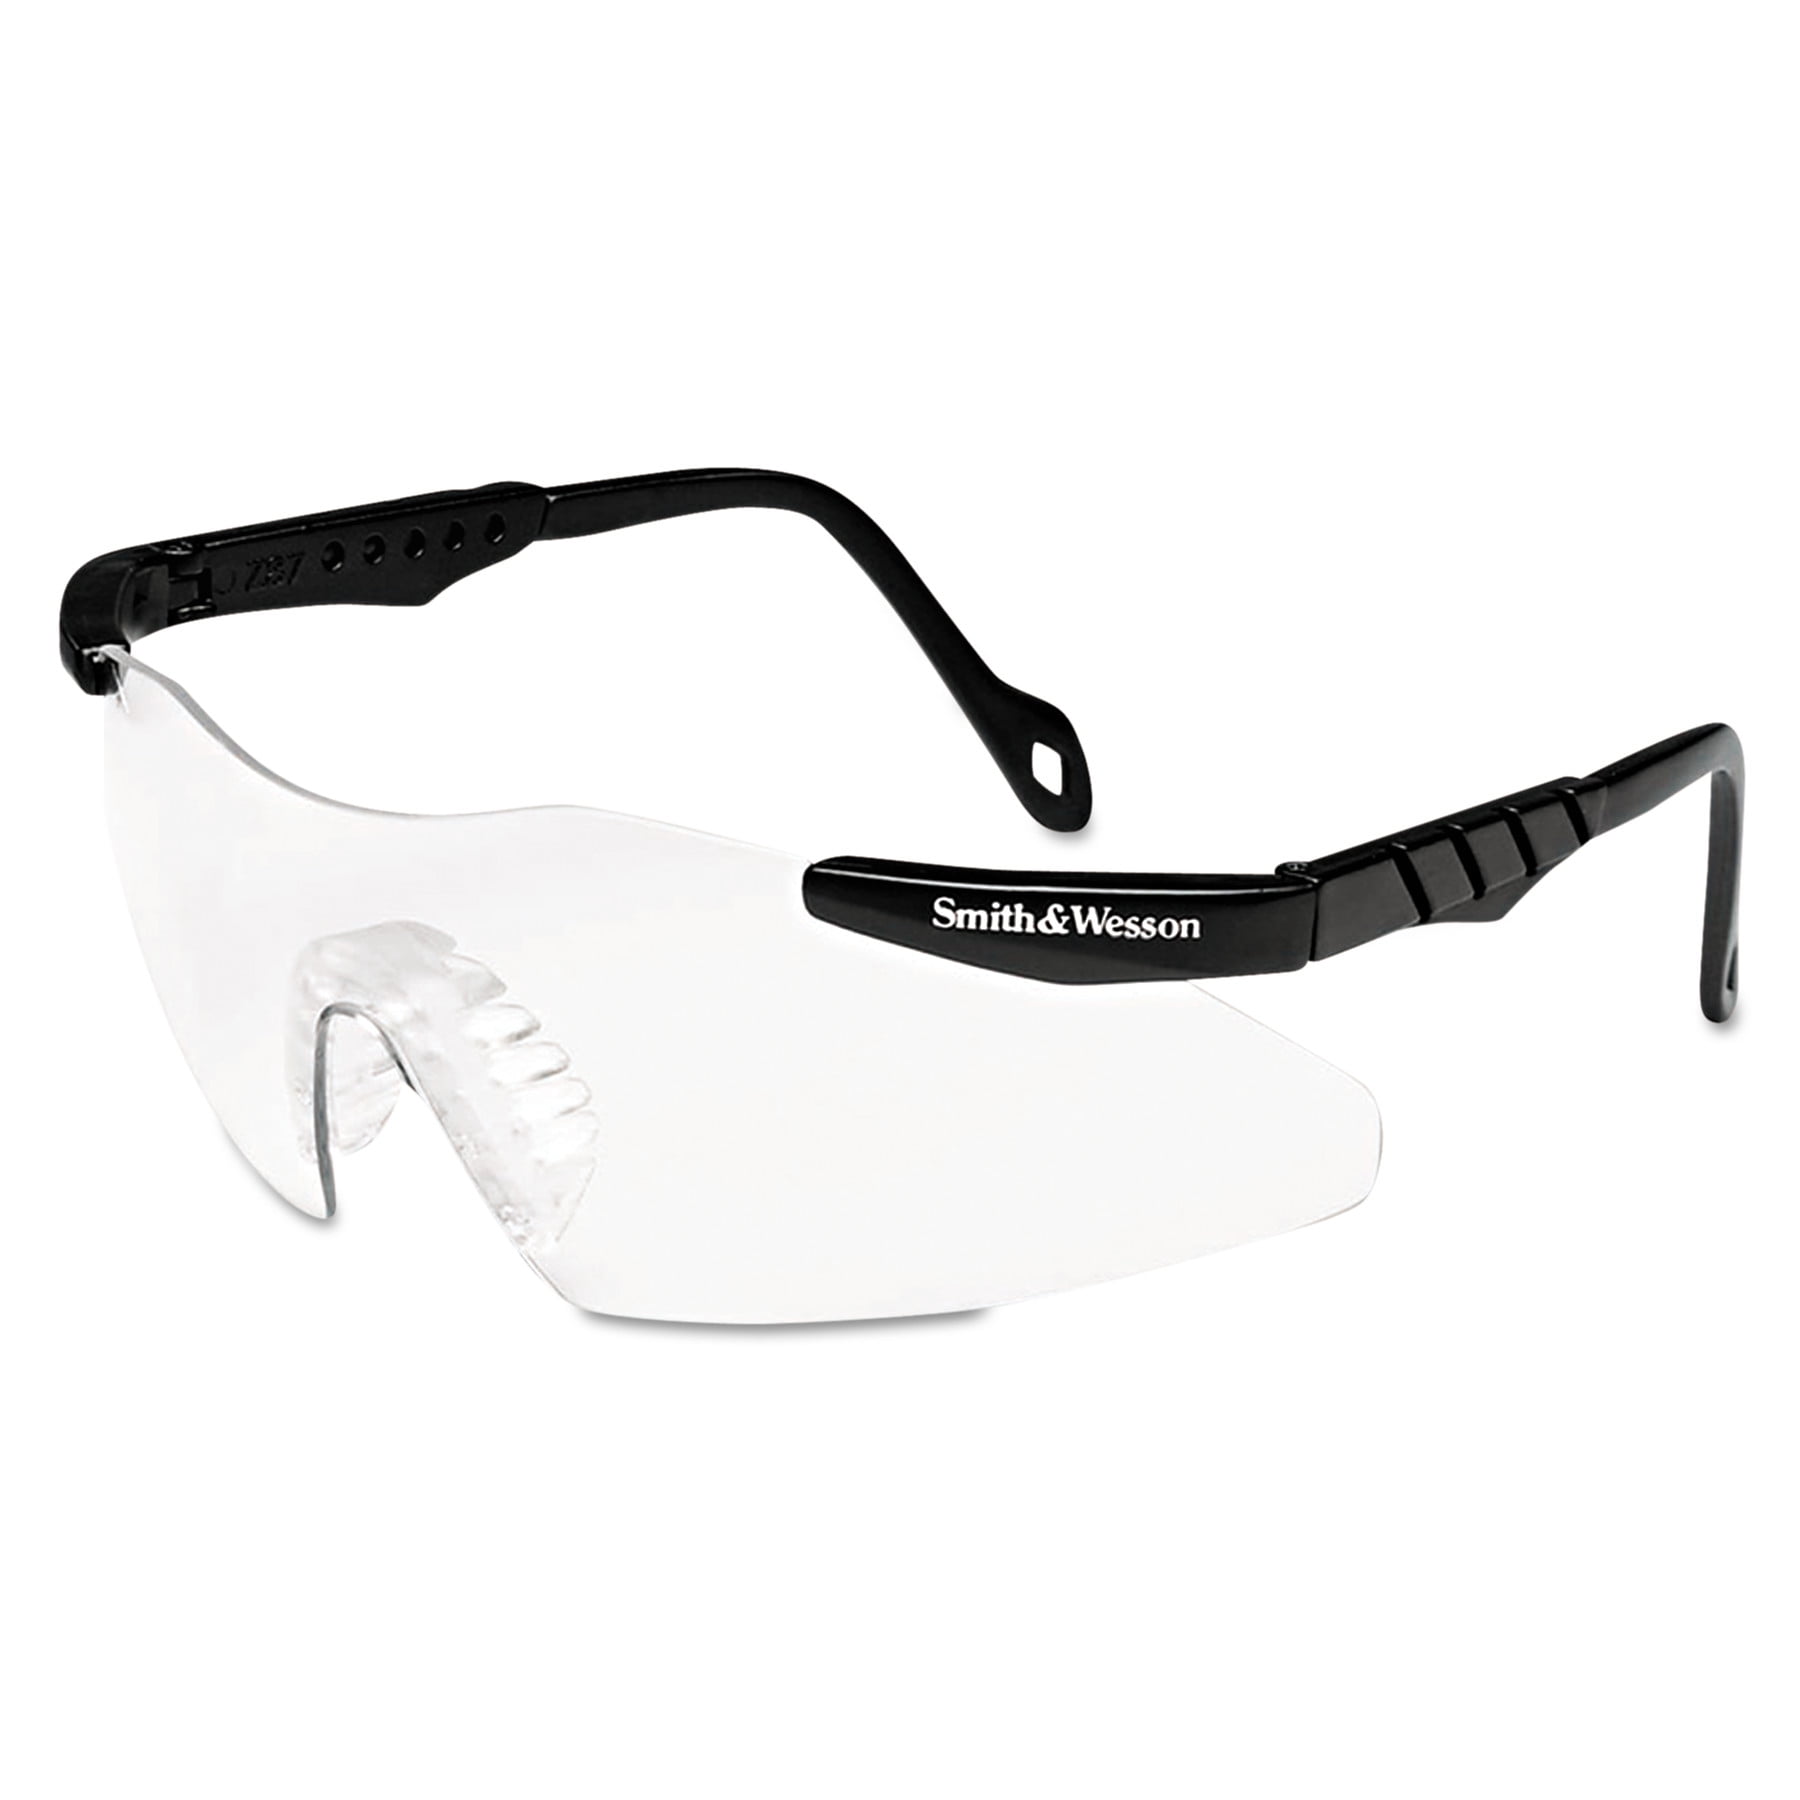 Jackson 3016312 Smith & Wesson Elite Safety Glasses Black Frame Clear Lens Anti for sale online 